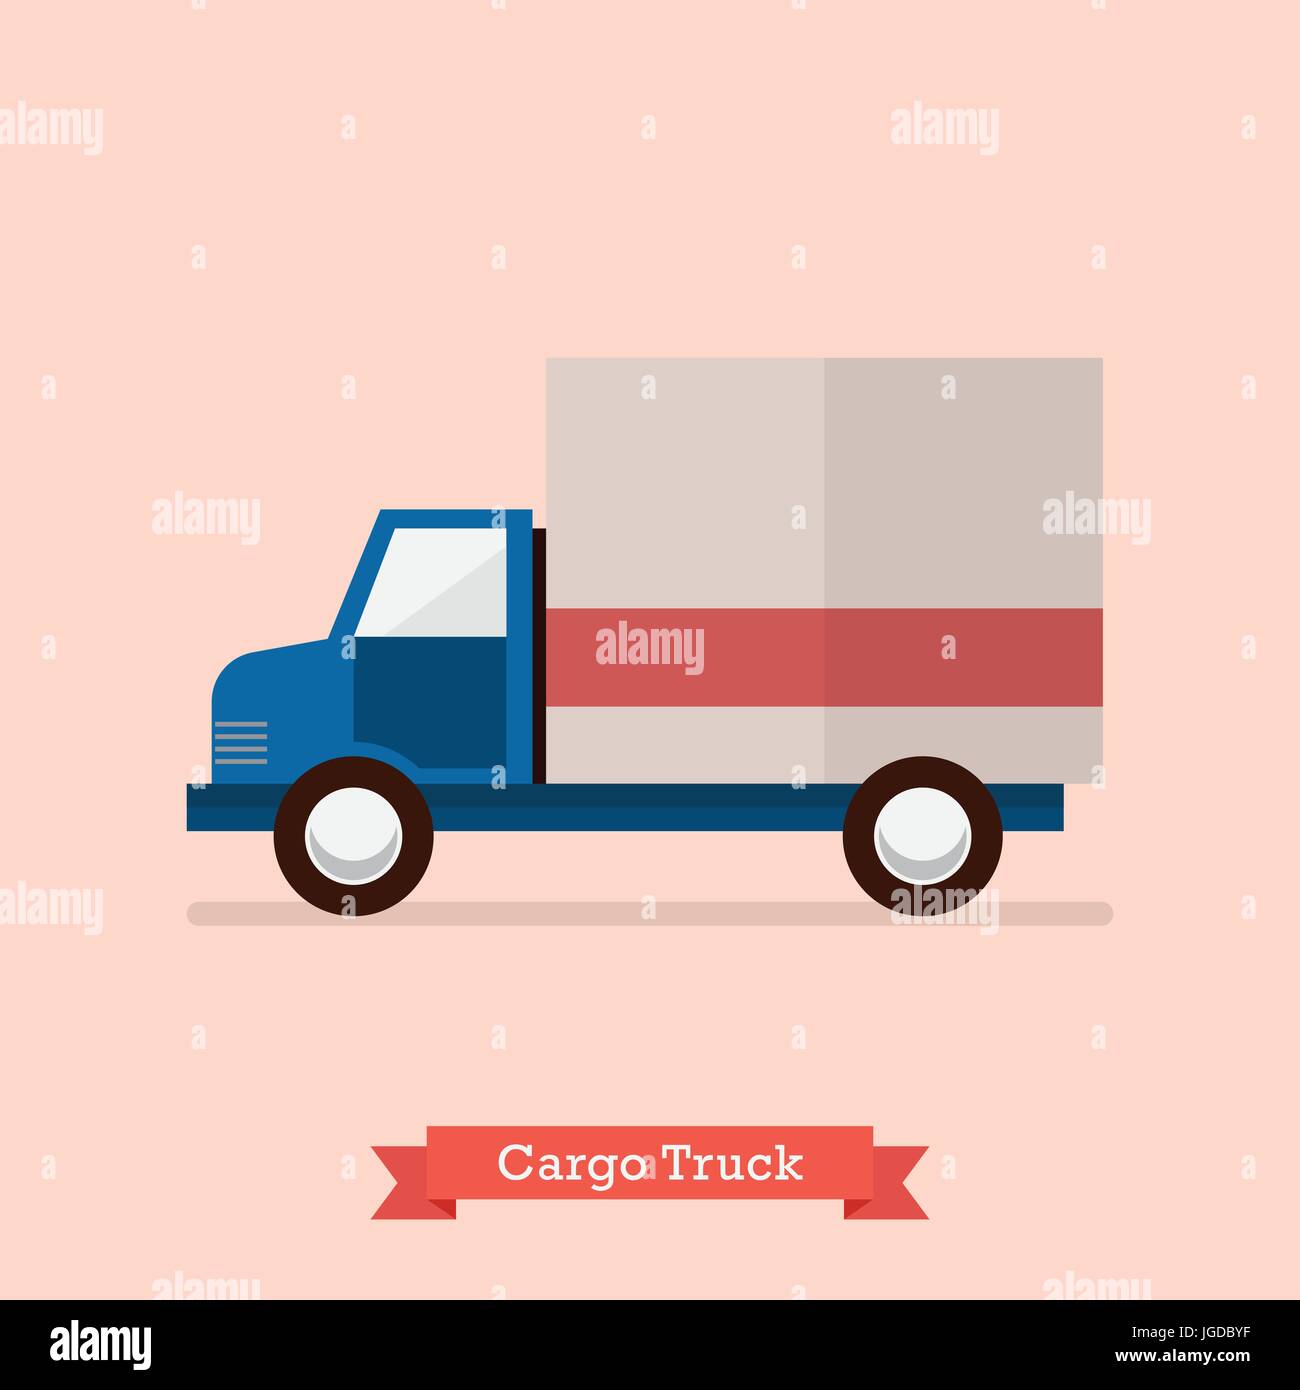 Cargo Truck Vector Illustration. Flat style design Stock Vector